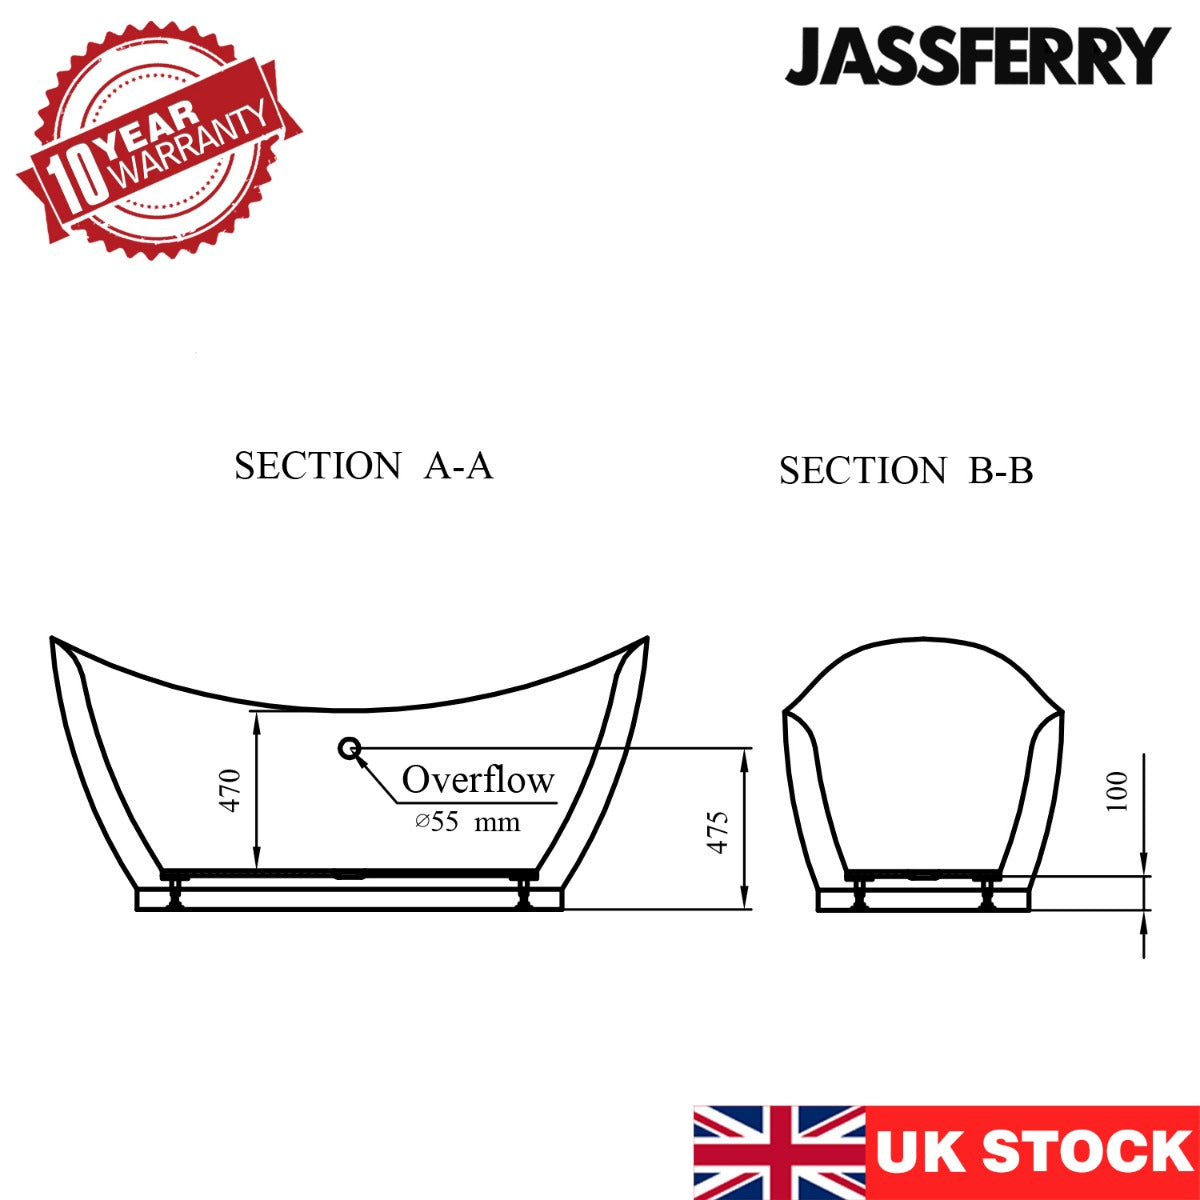 JassferryJASSFERRY 1750x815 mm Modern Design Double Ended Slipper Freestanding BathtubBathtubs